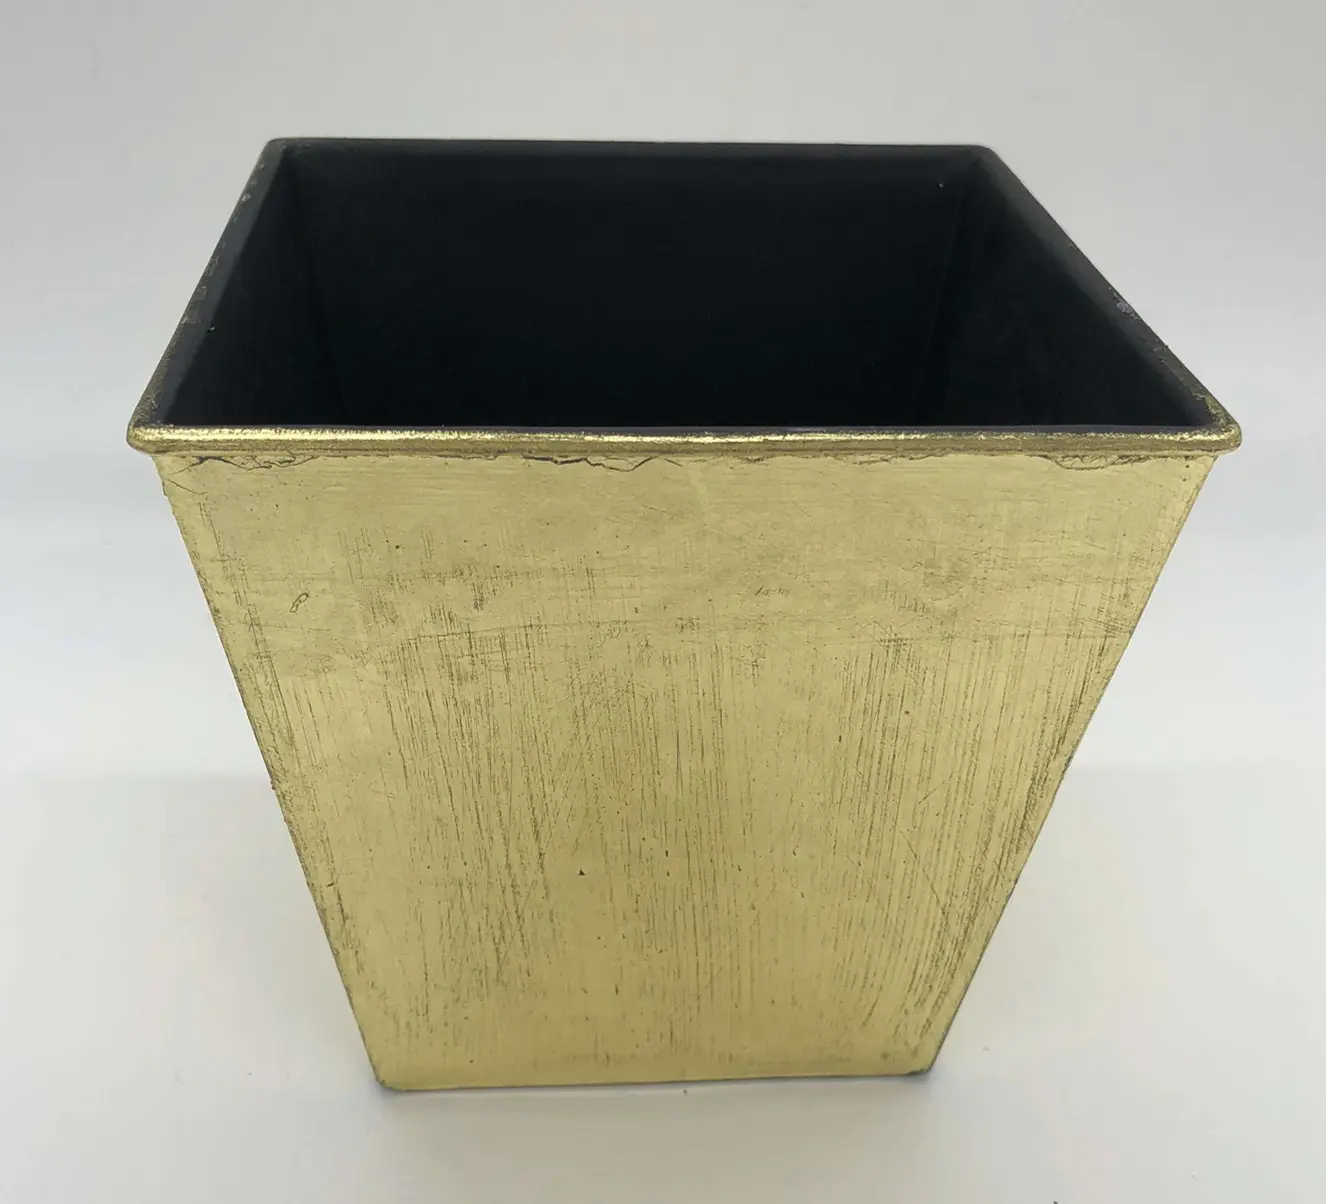 Square Gold plastic pot for inside home or garden